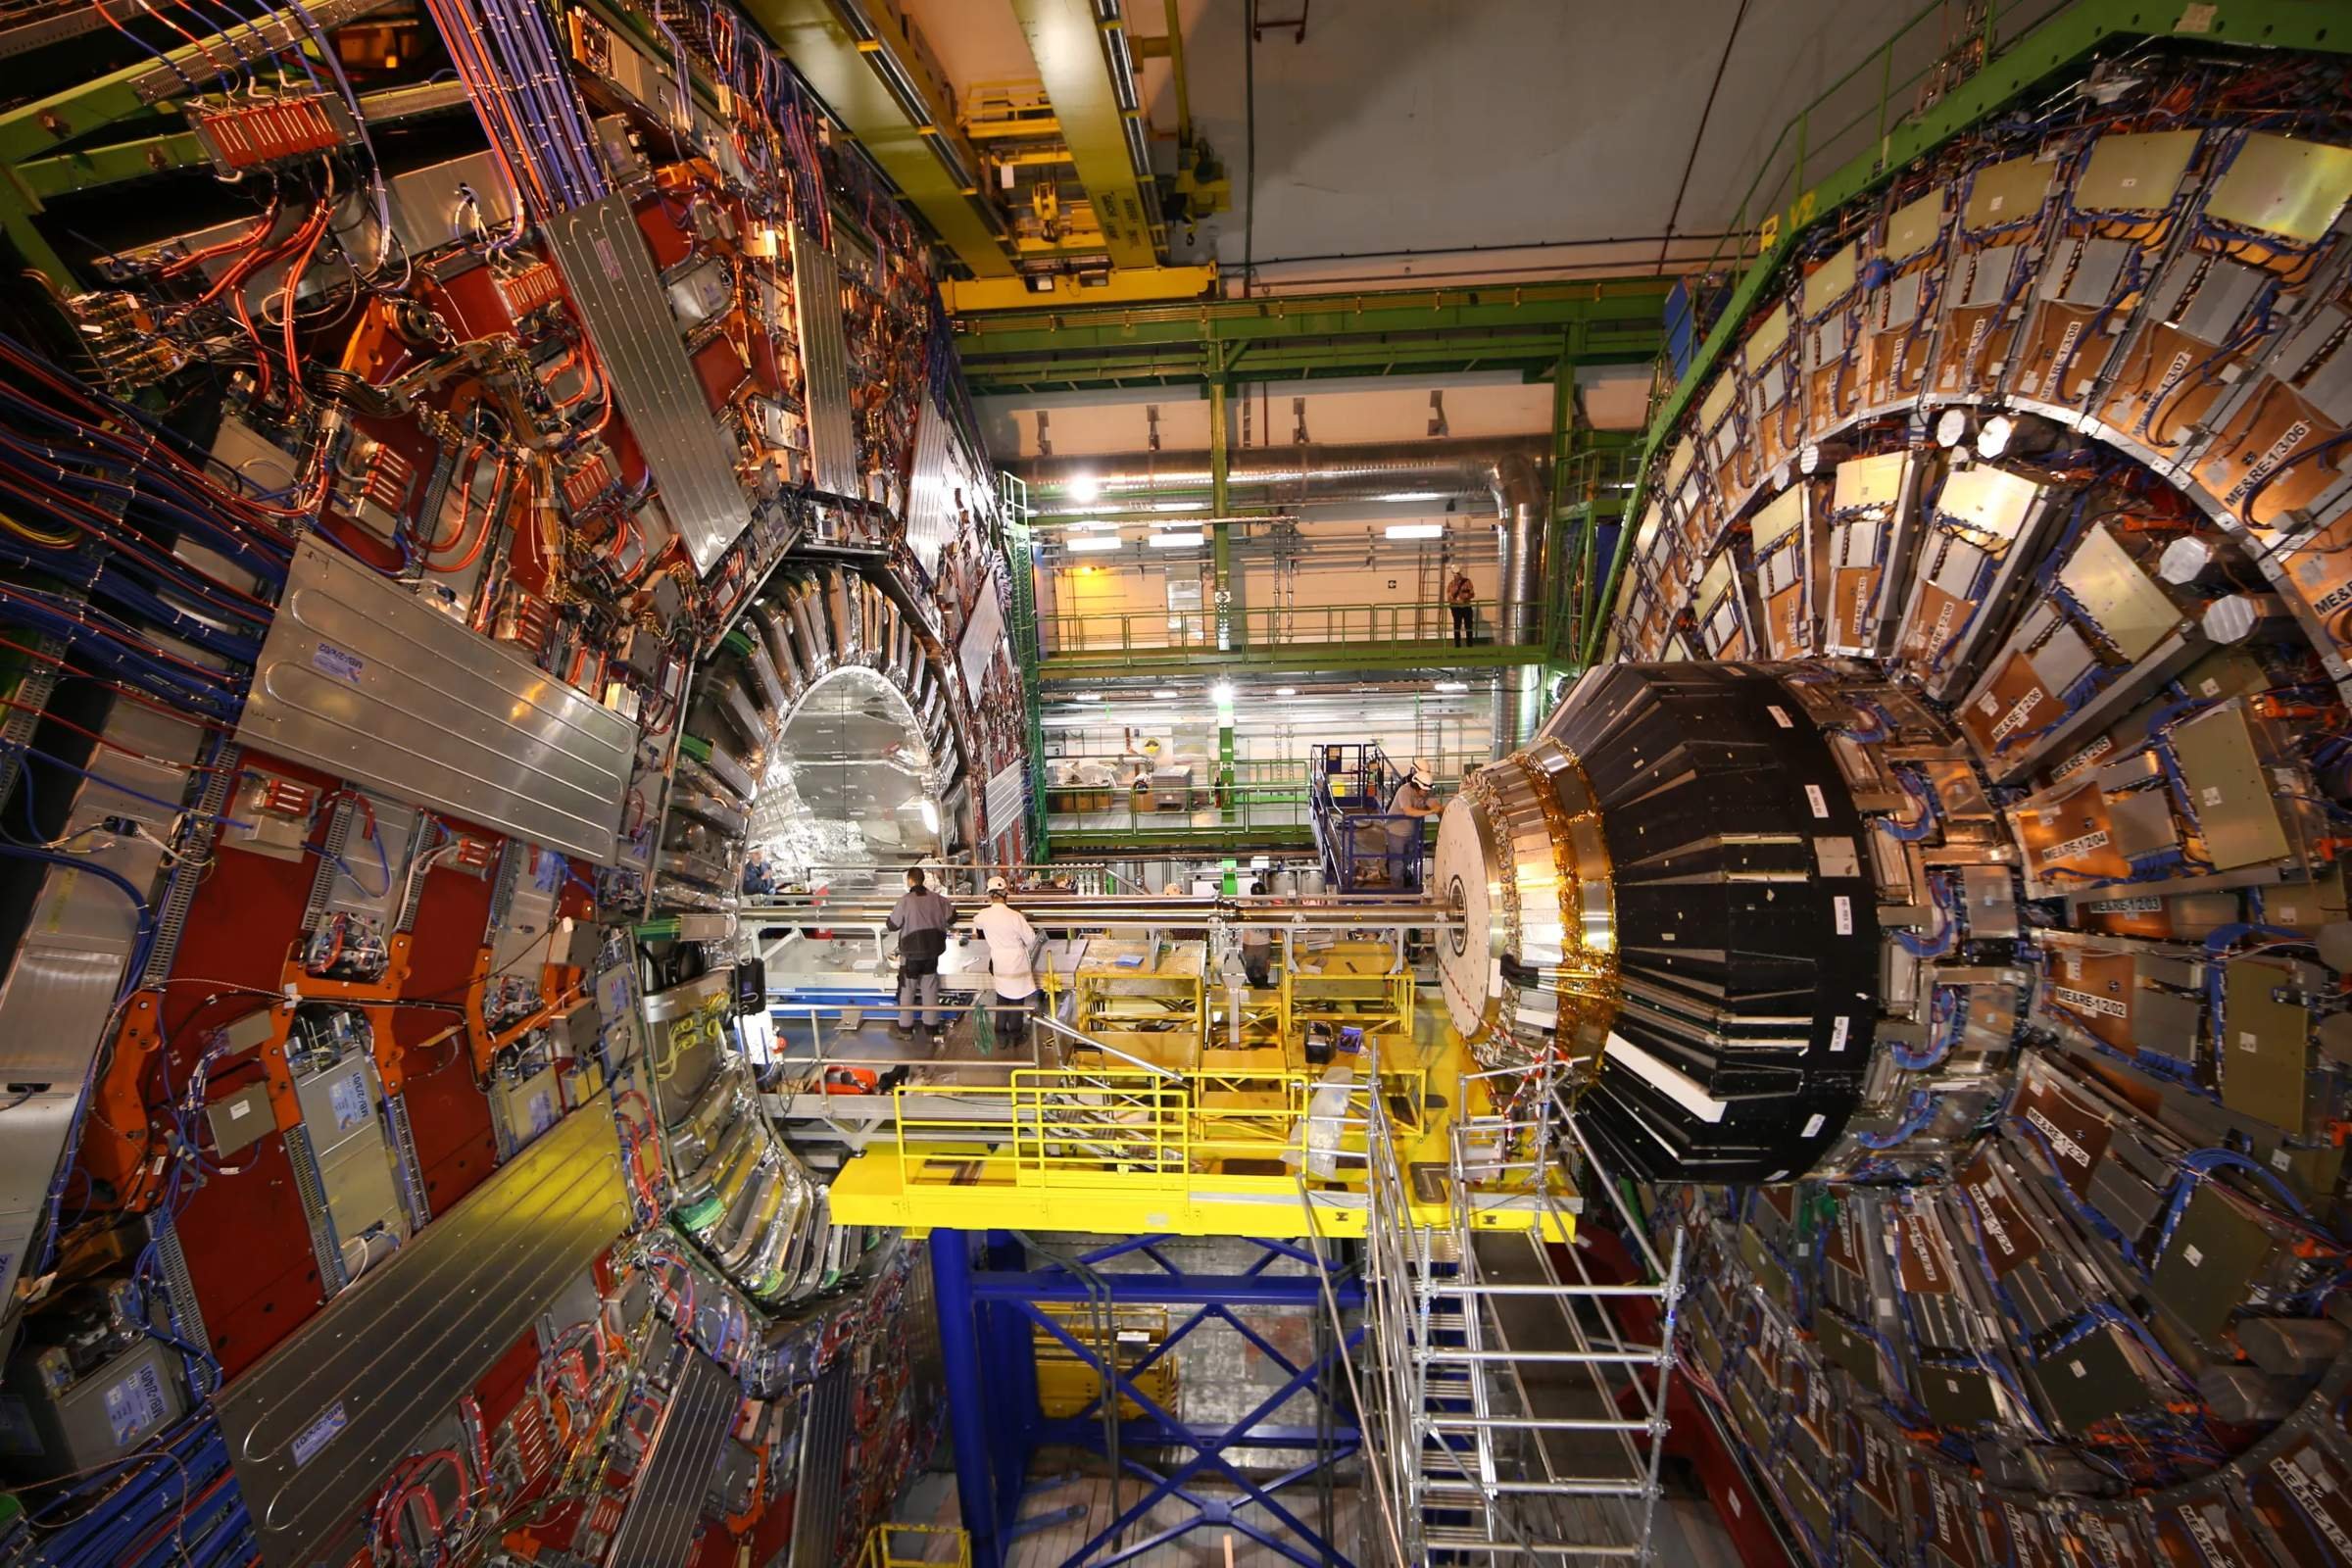 Самая большая частица. Большой адронный коллайдер ЦЕРН. Коллайдер адронный коллайдер. Адронный коллайдер в Женеве. Адронный коллайдер 2008.